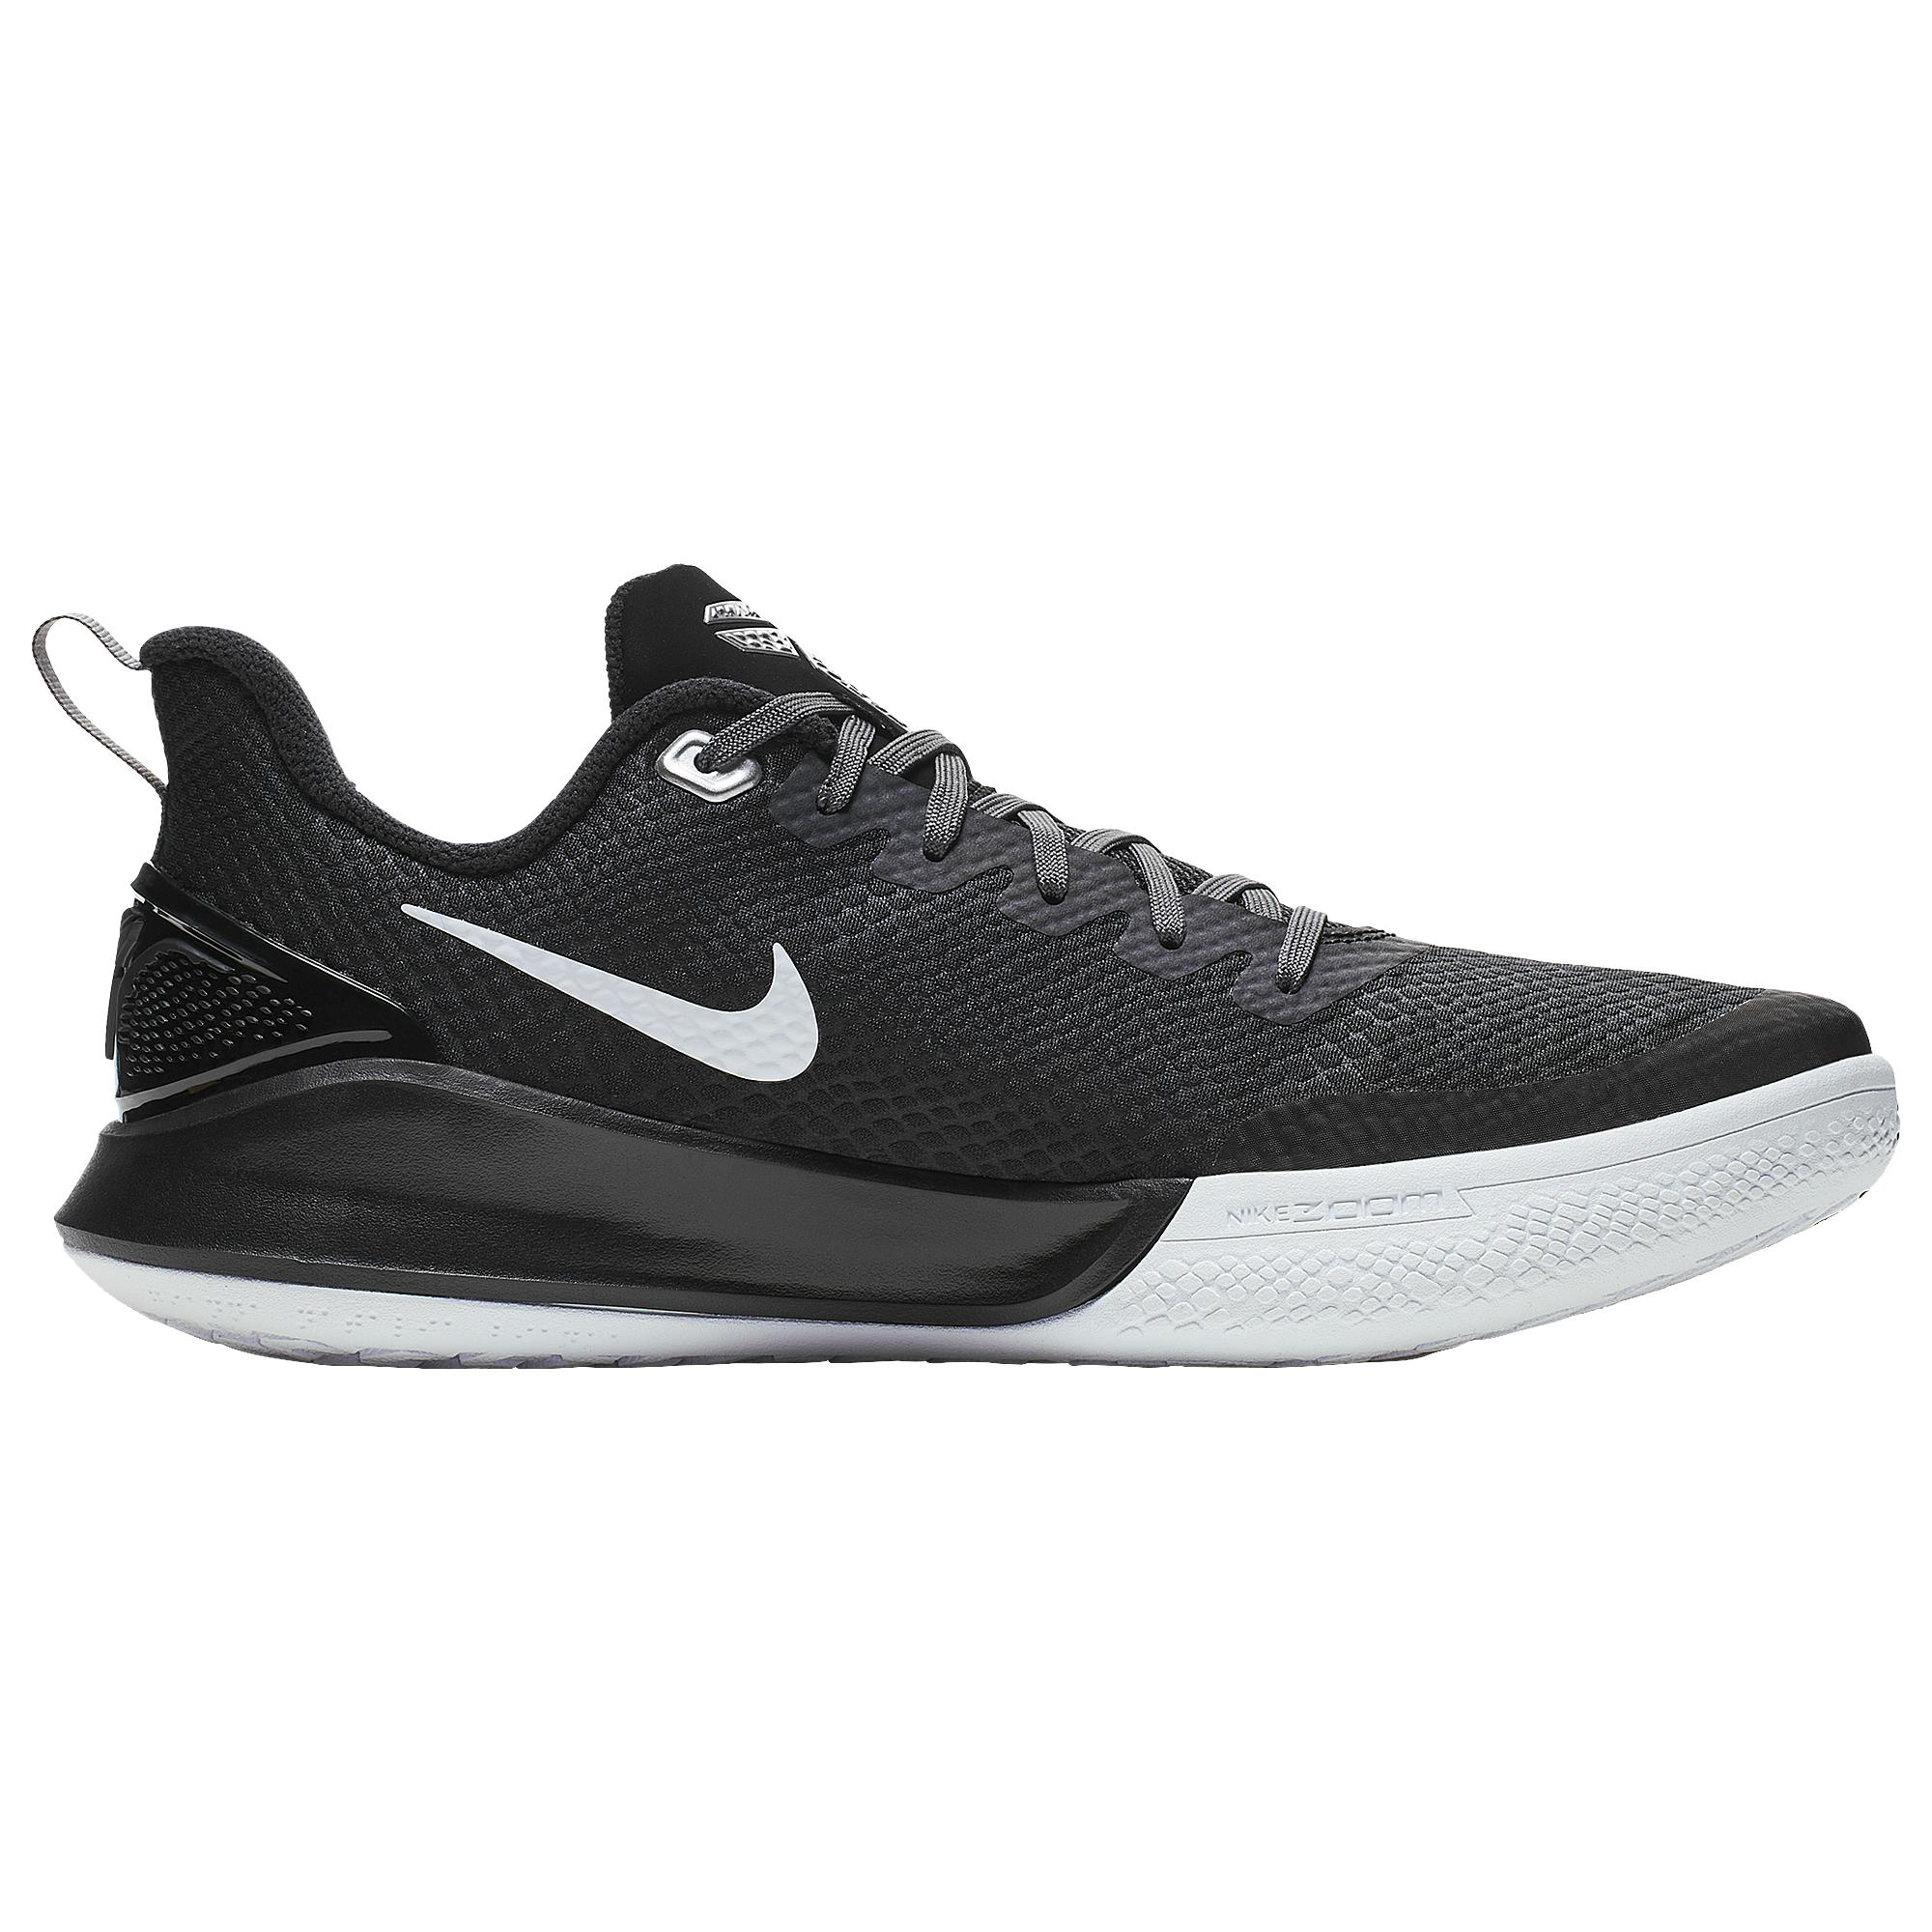 Nike Mamba Focus Basketball Shoes in Black/White Dark Grey Metallic s ...